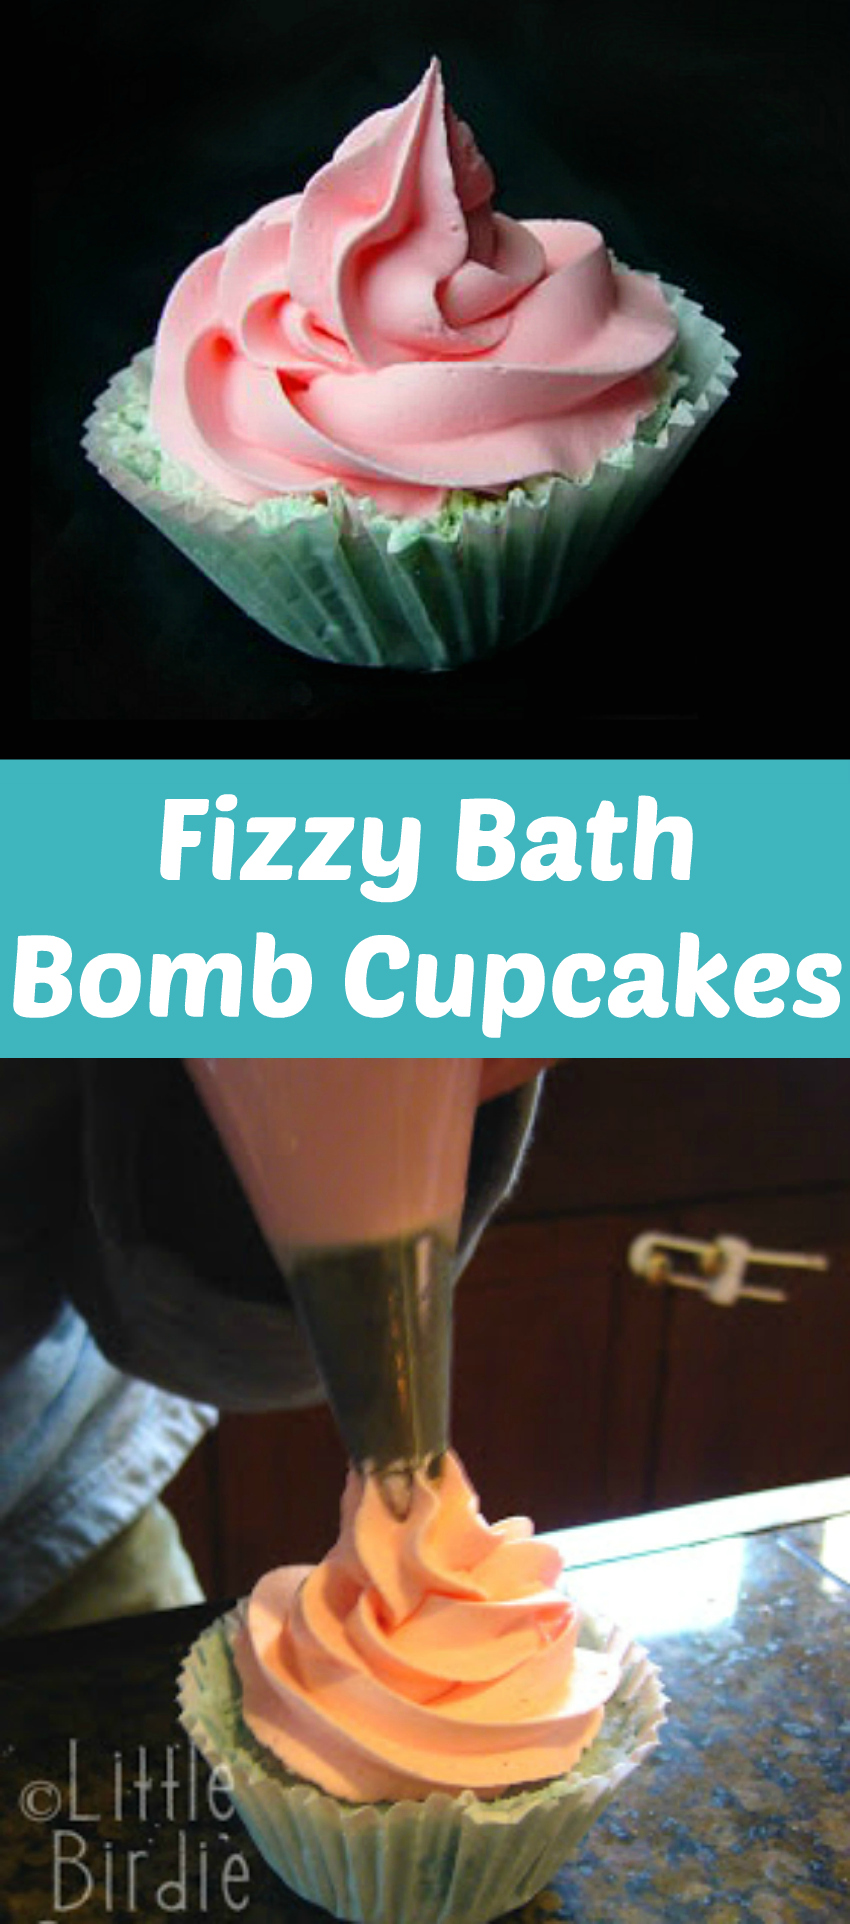 DIY Fizzy Bath Bomb Cupcakes